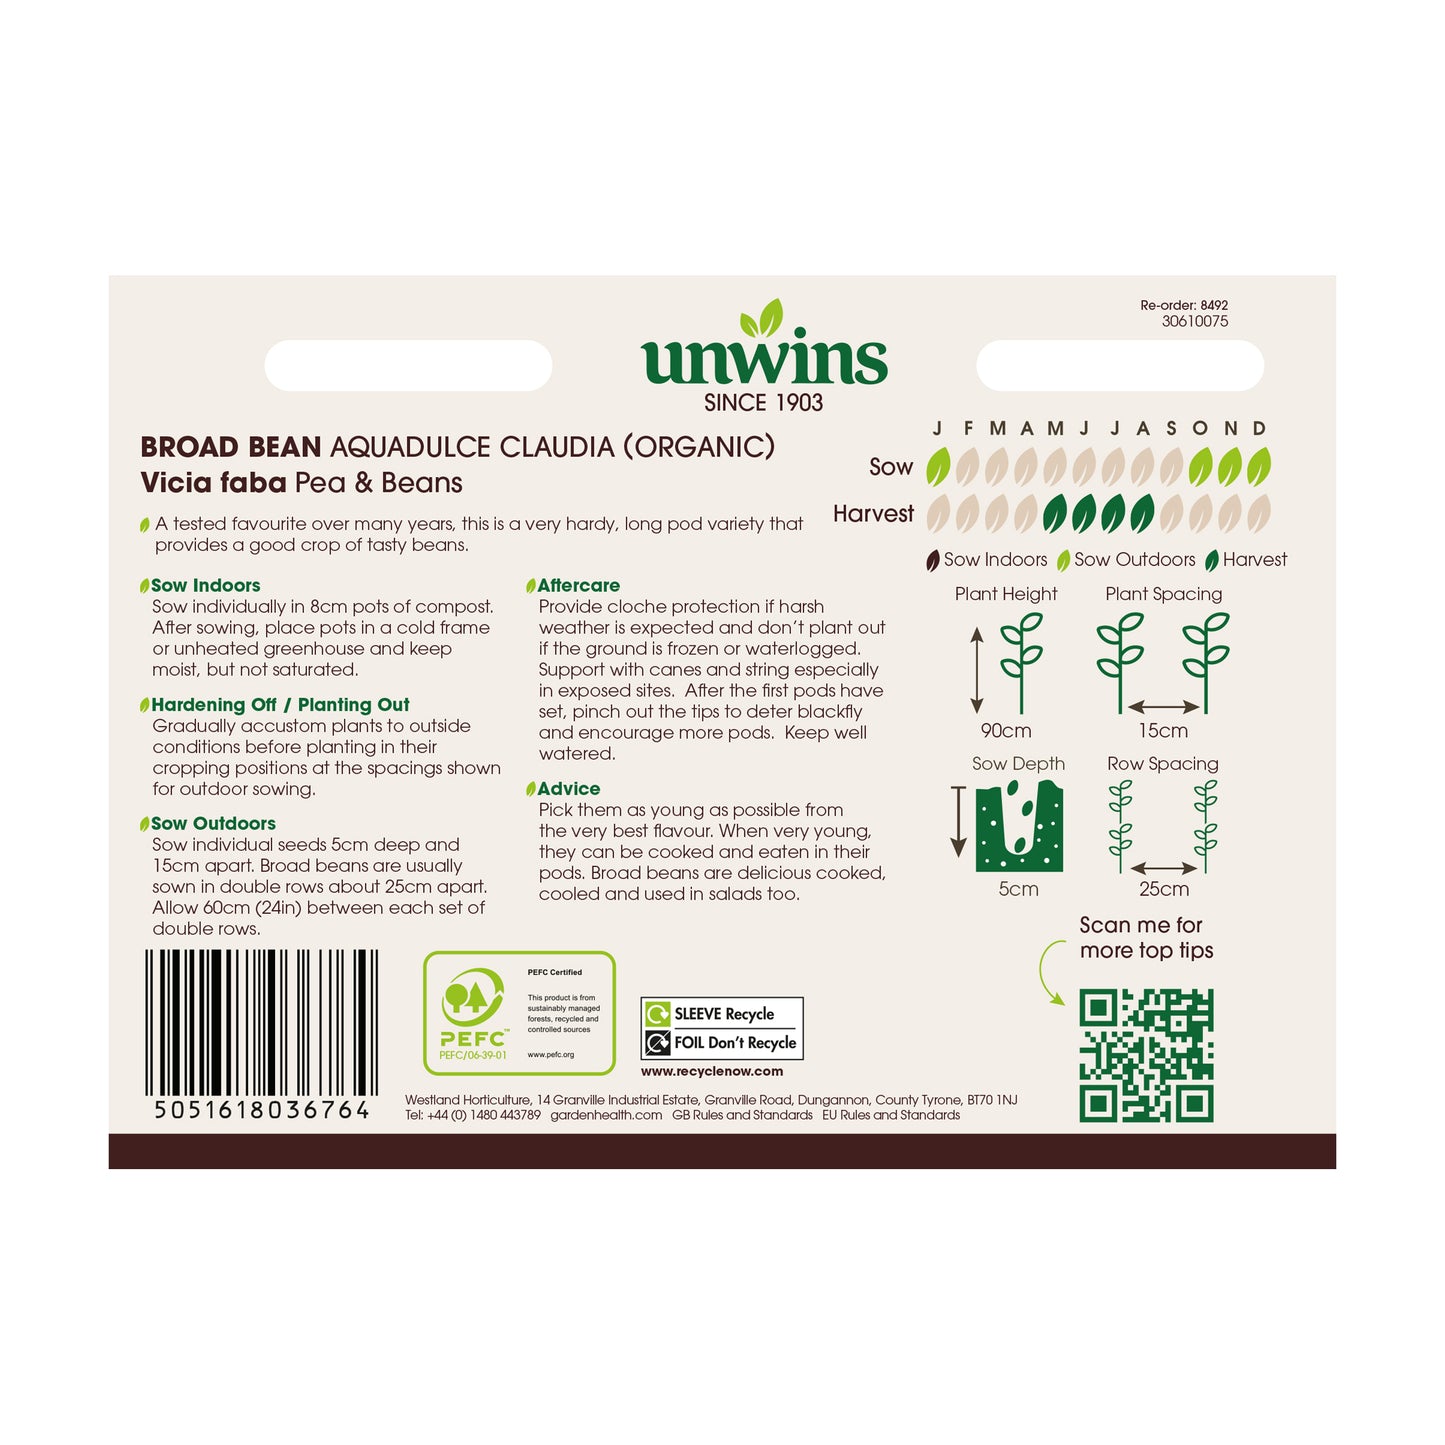 Unwins Organic Broad Bean Aquadulce Claudia Seeds Back